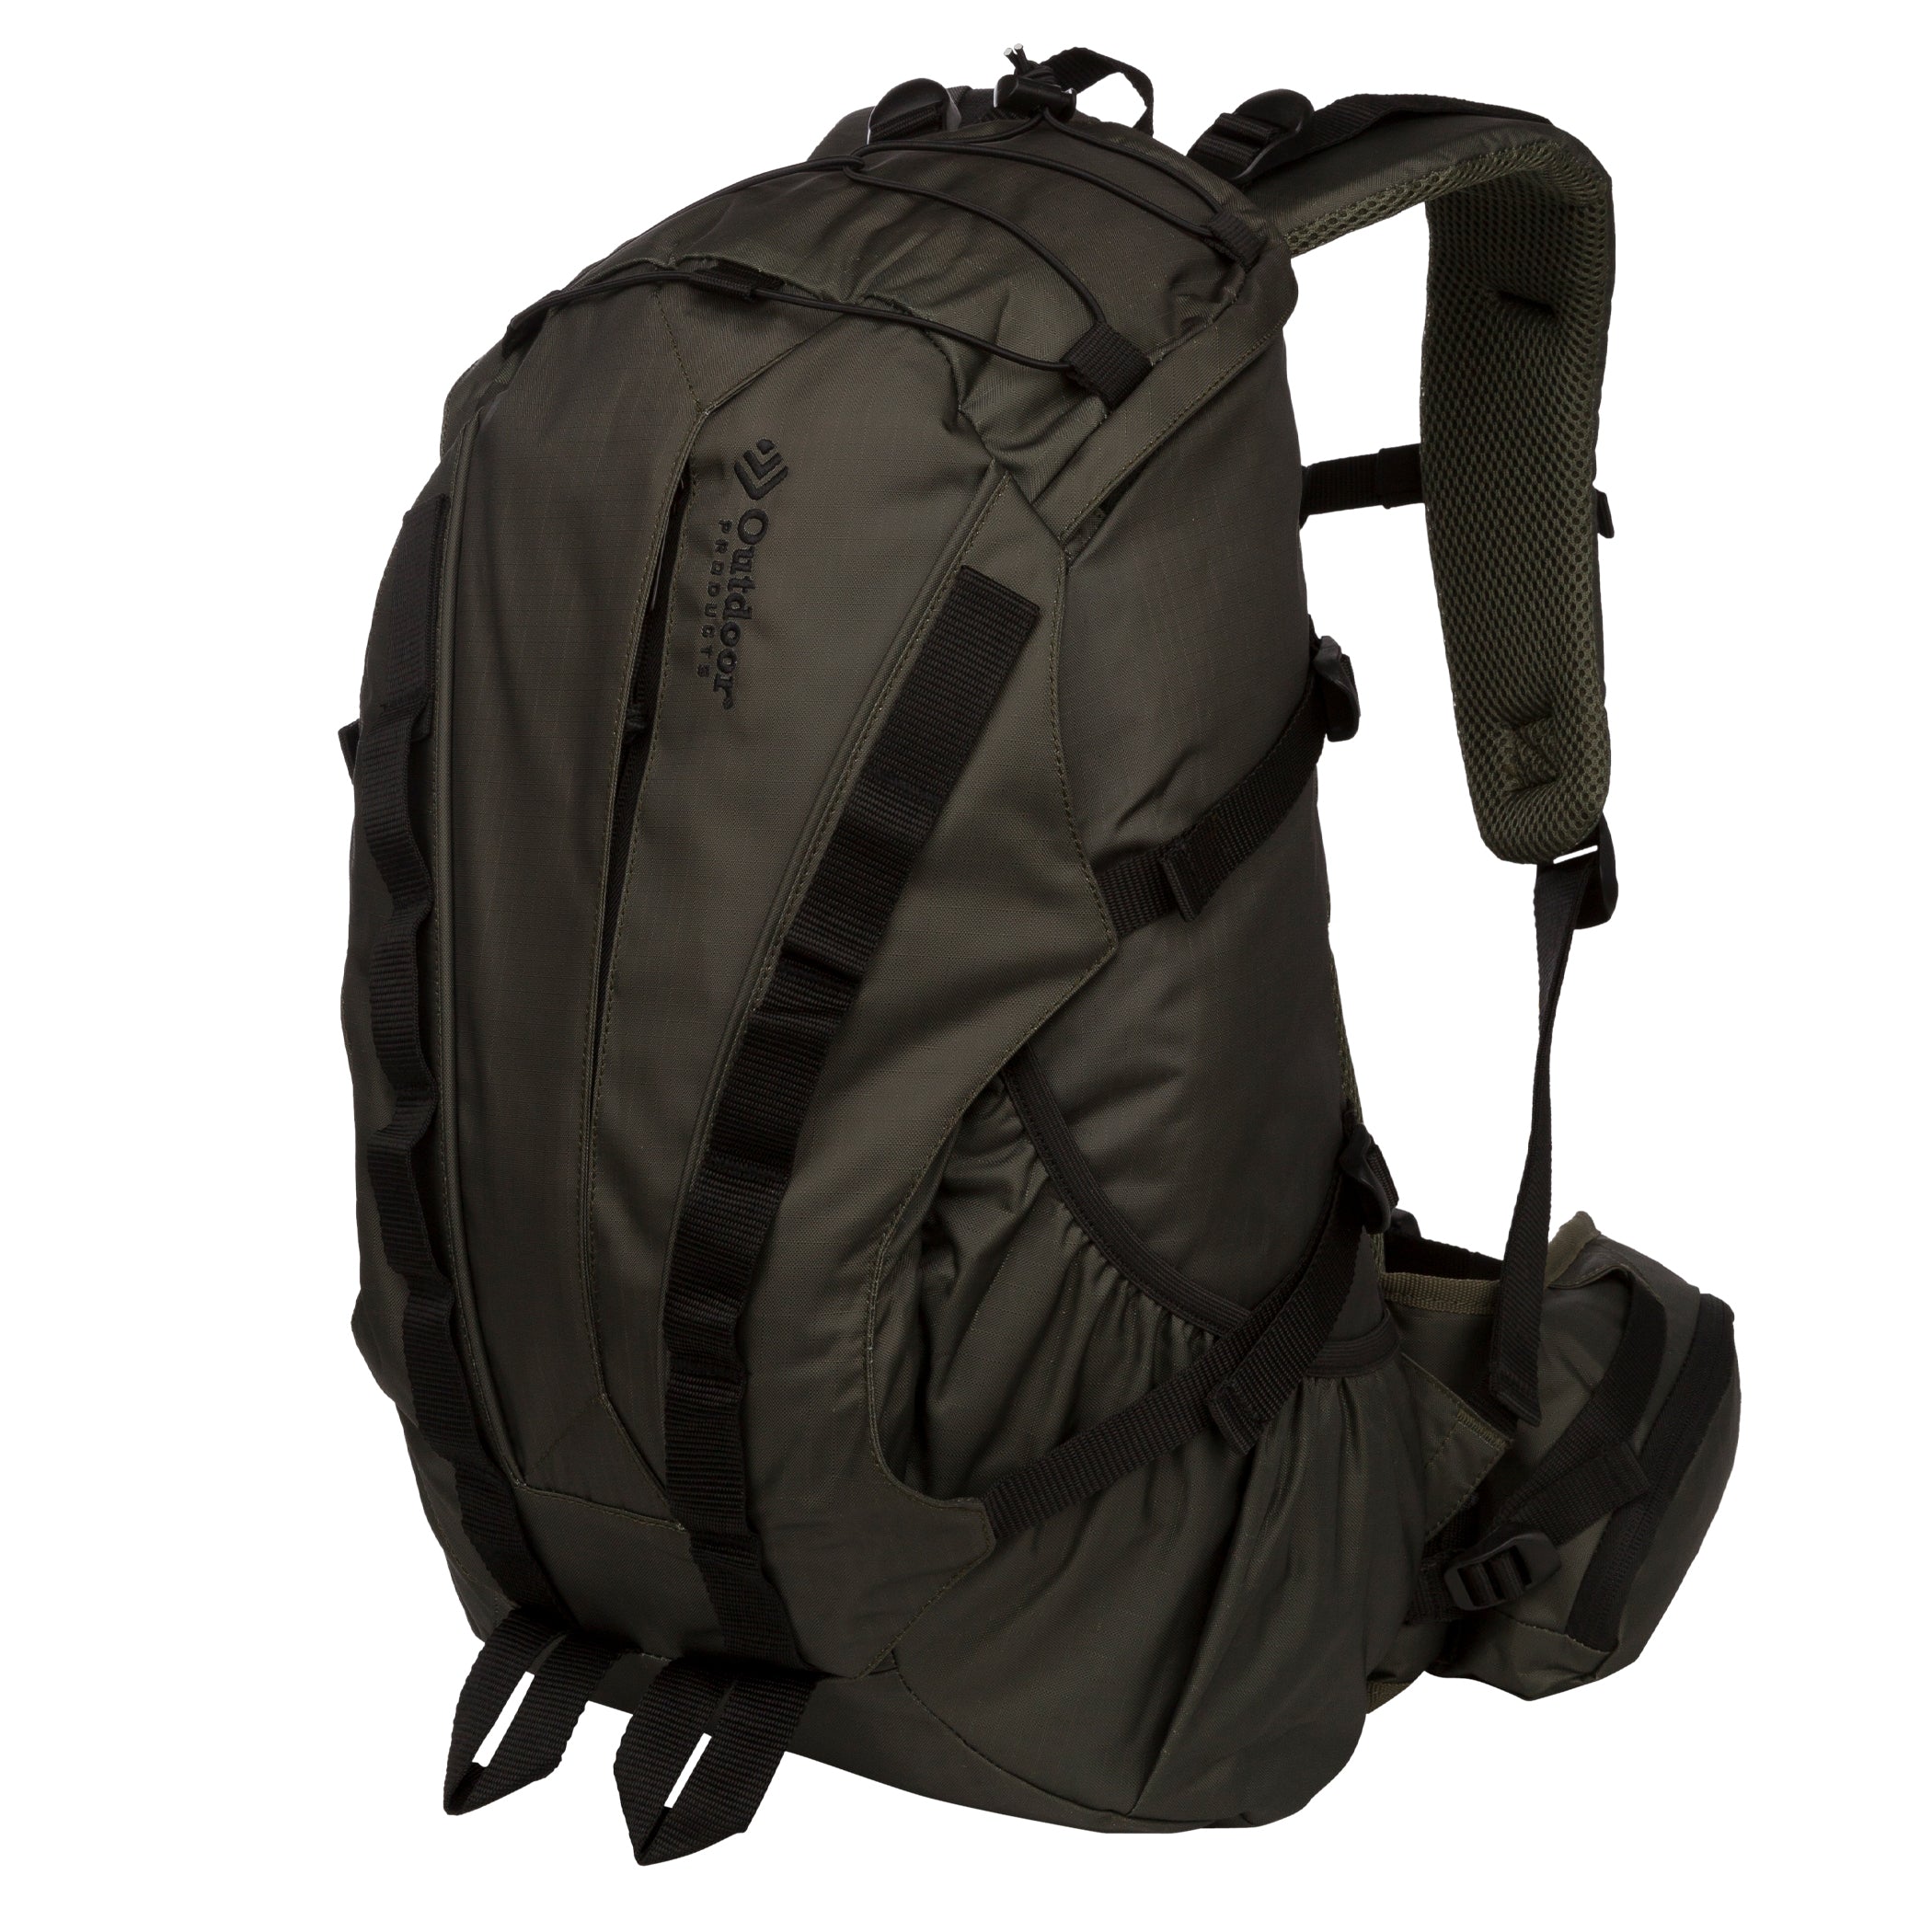 Outdoor Products Skyline Internal Frame Backpack, Black